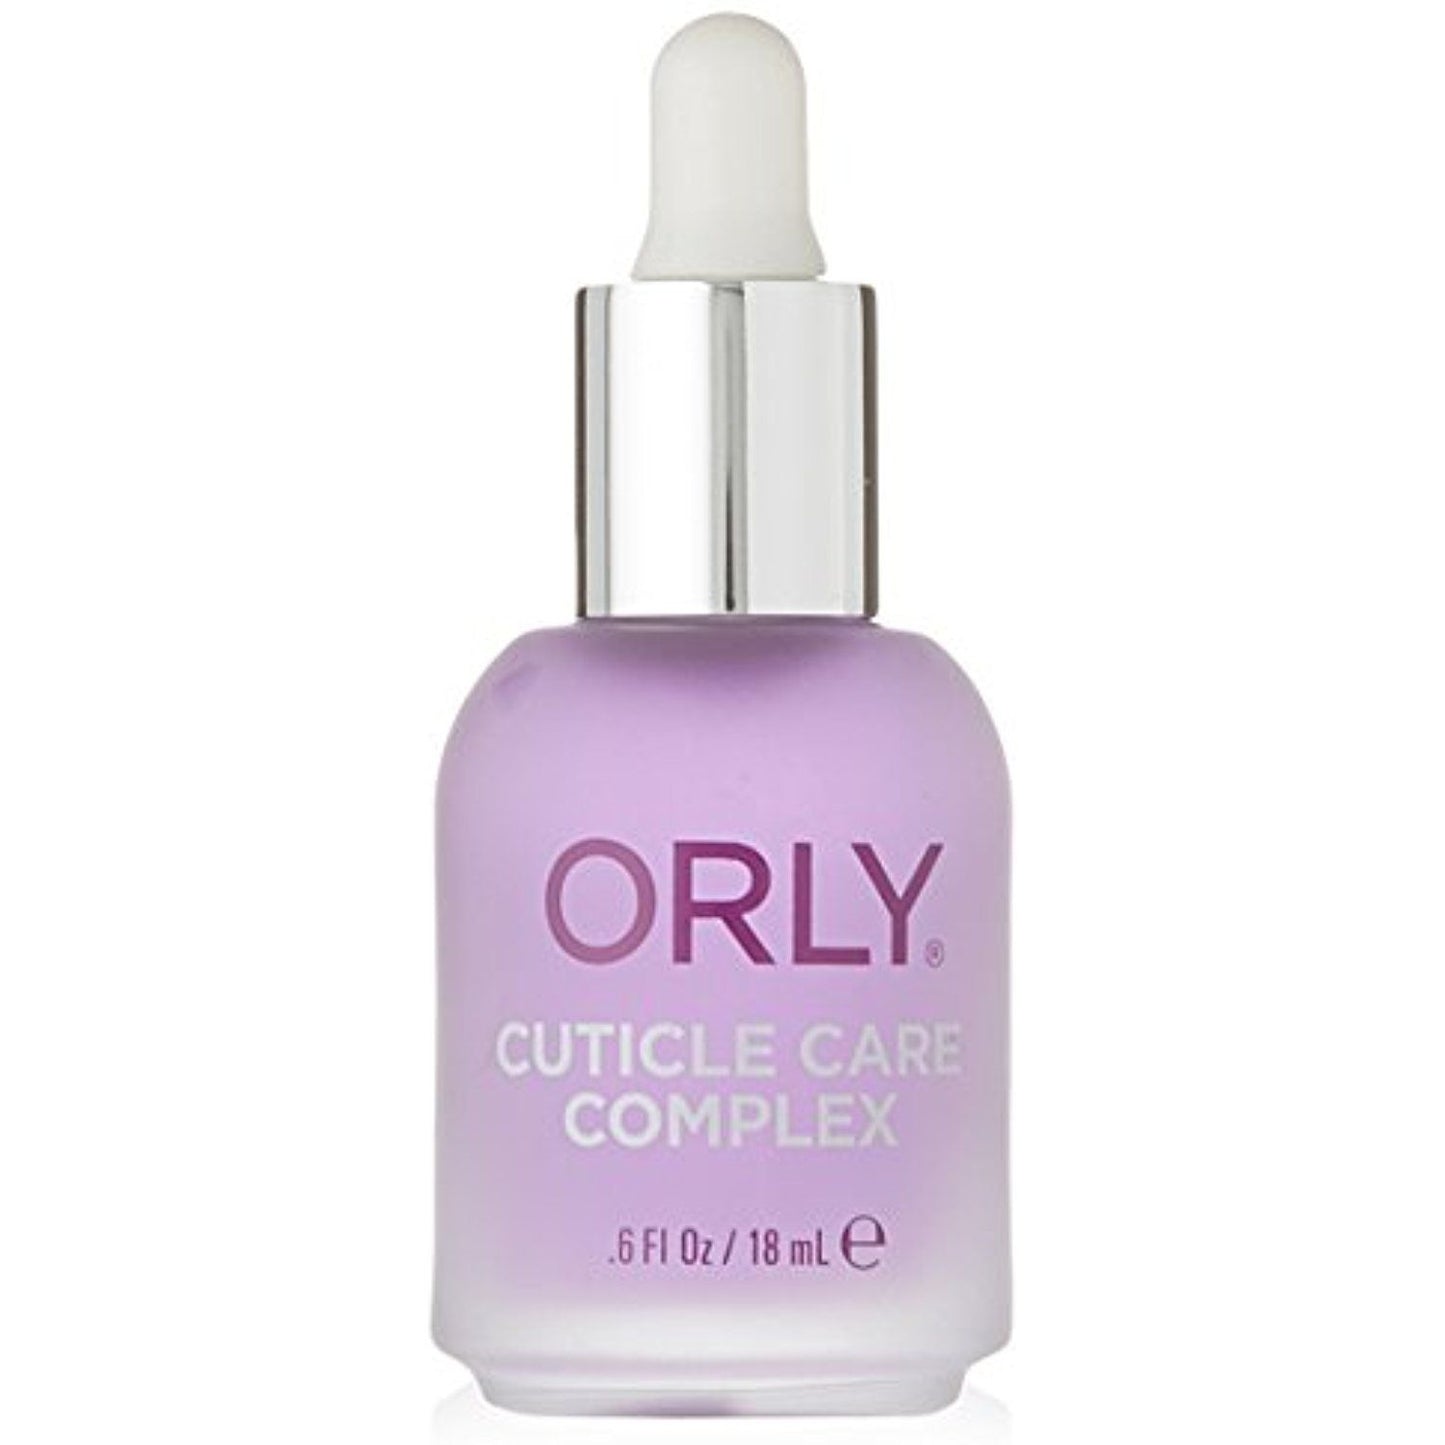 Cuticle Care Complex (Orly Nail Polish) - 18 ml